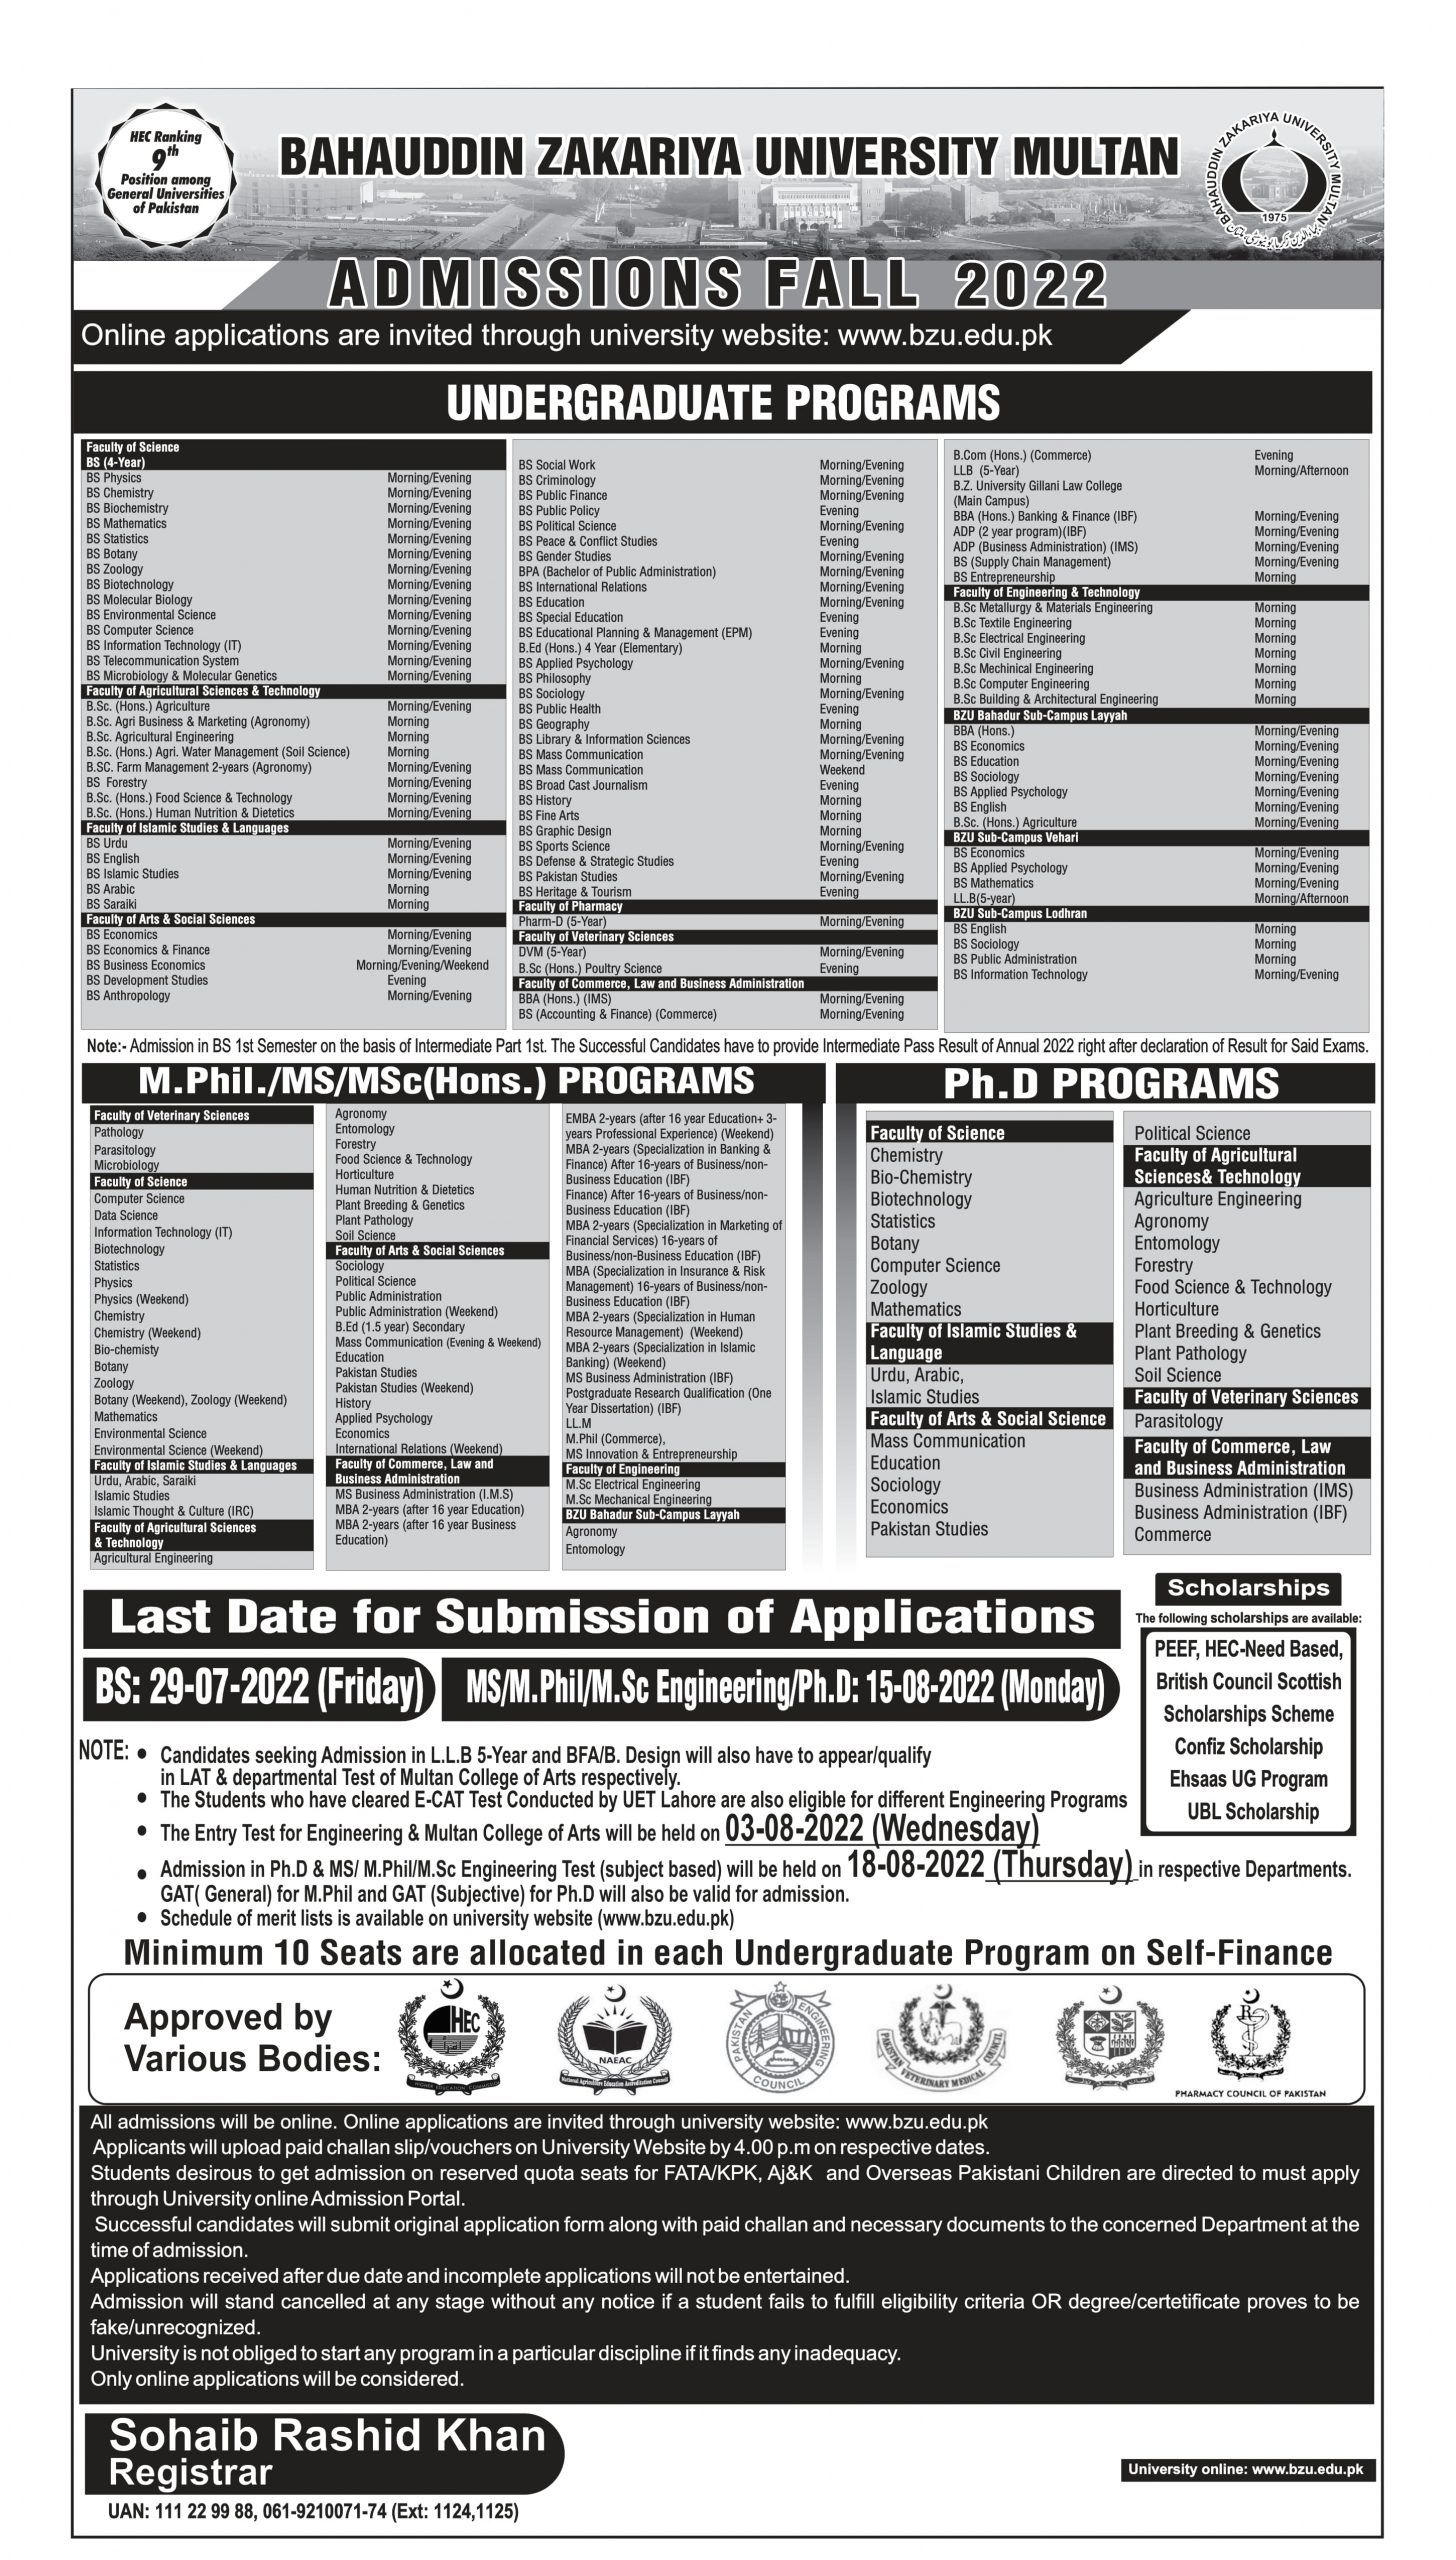 BZU Multan admission 2022 last date advertisement